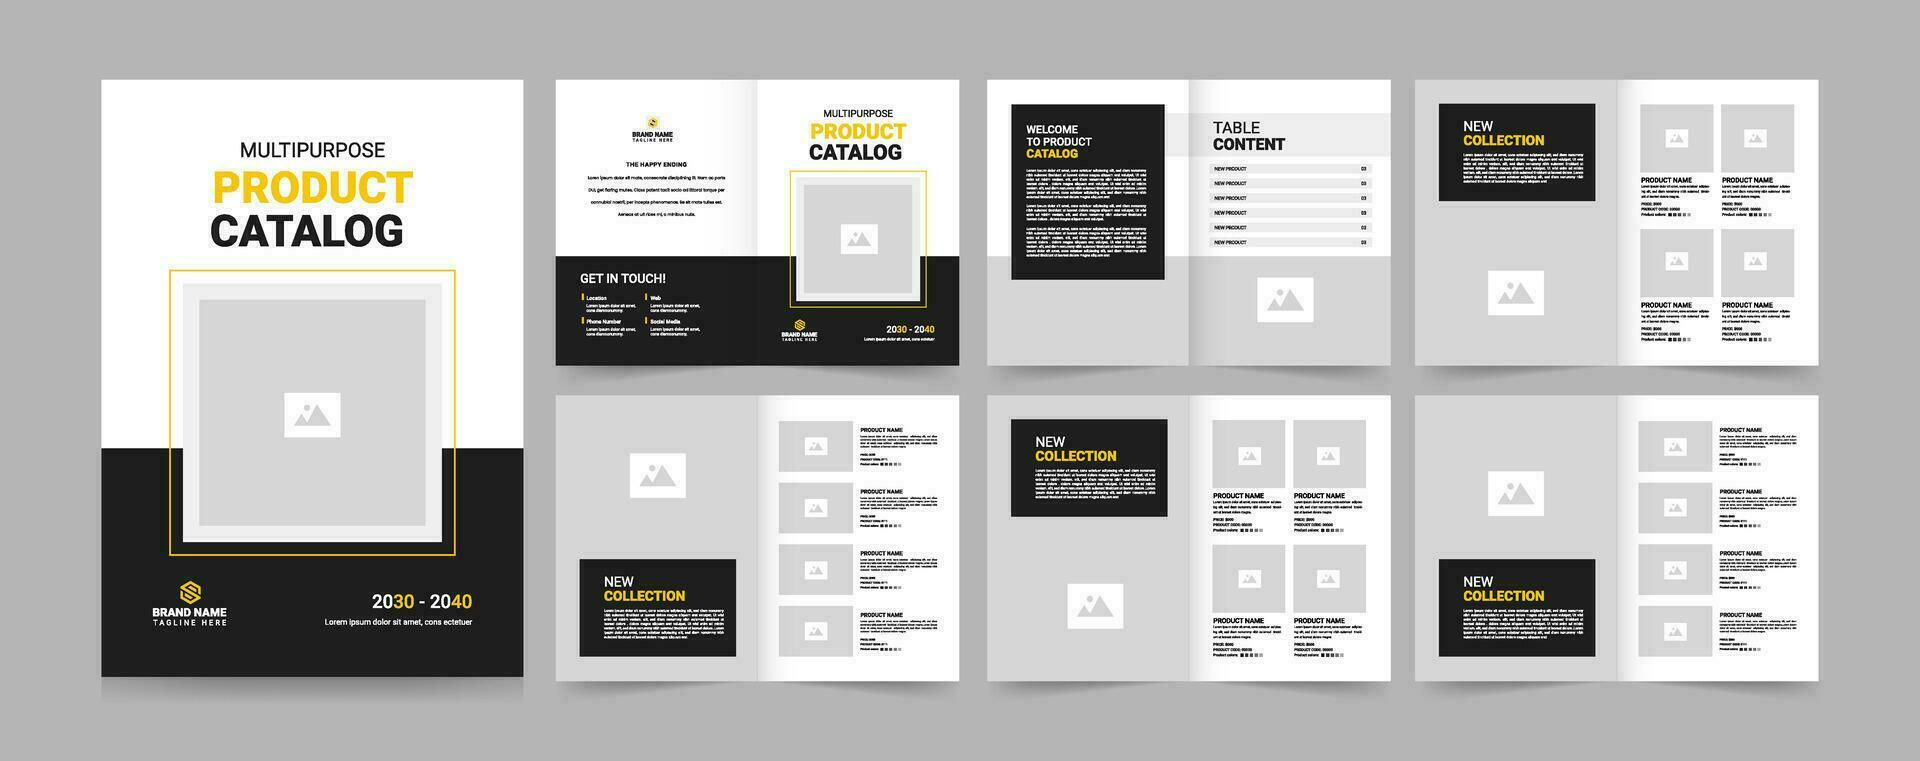 modern Product catalogus ontwerp sjabloon. Product catalogus. vector illustratie